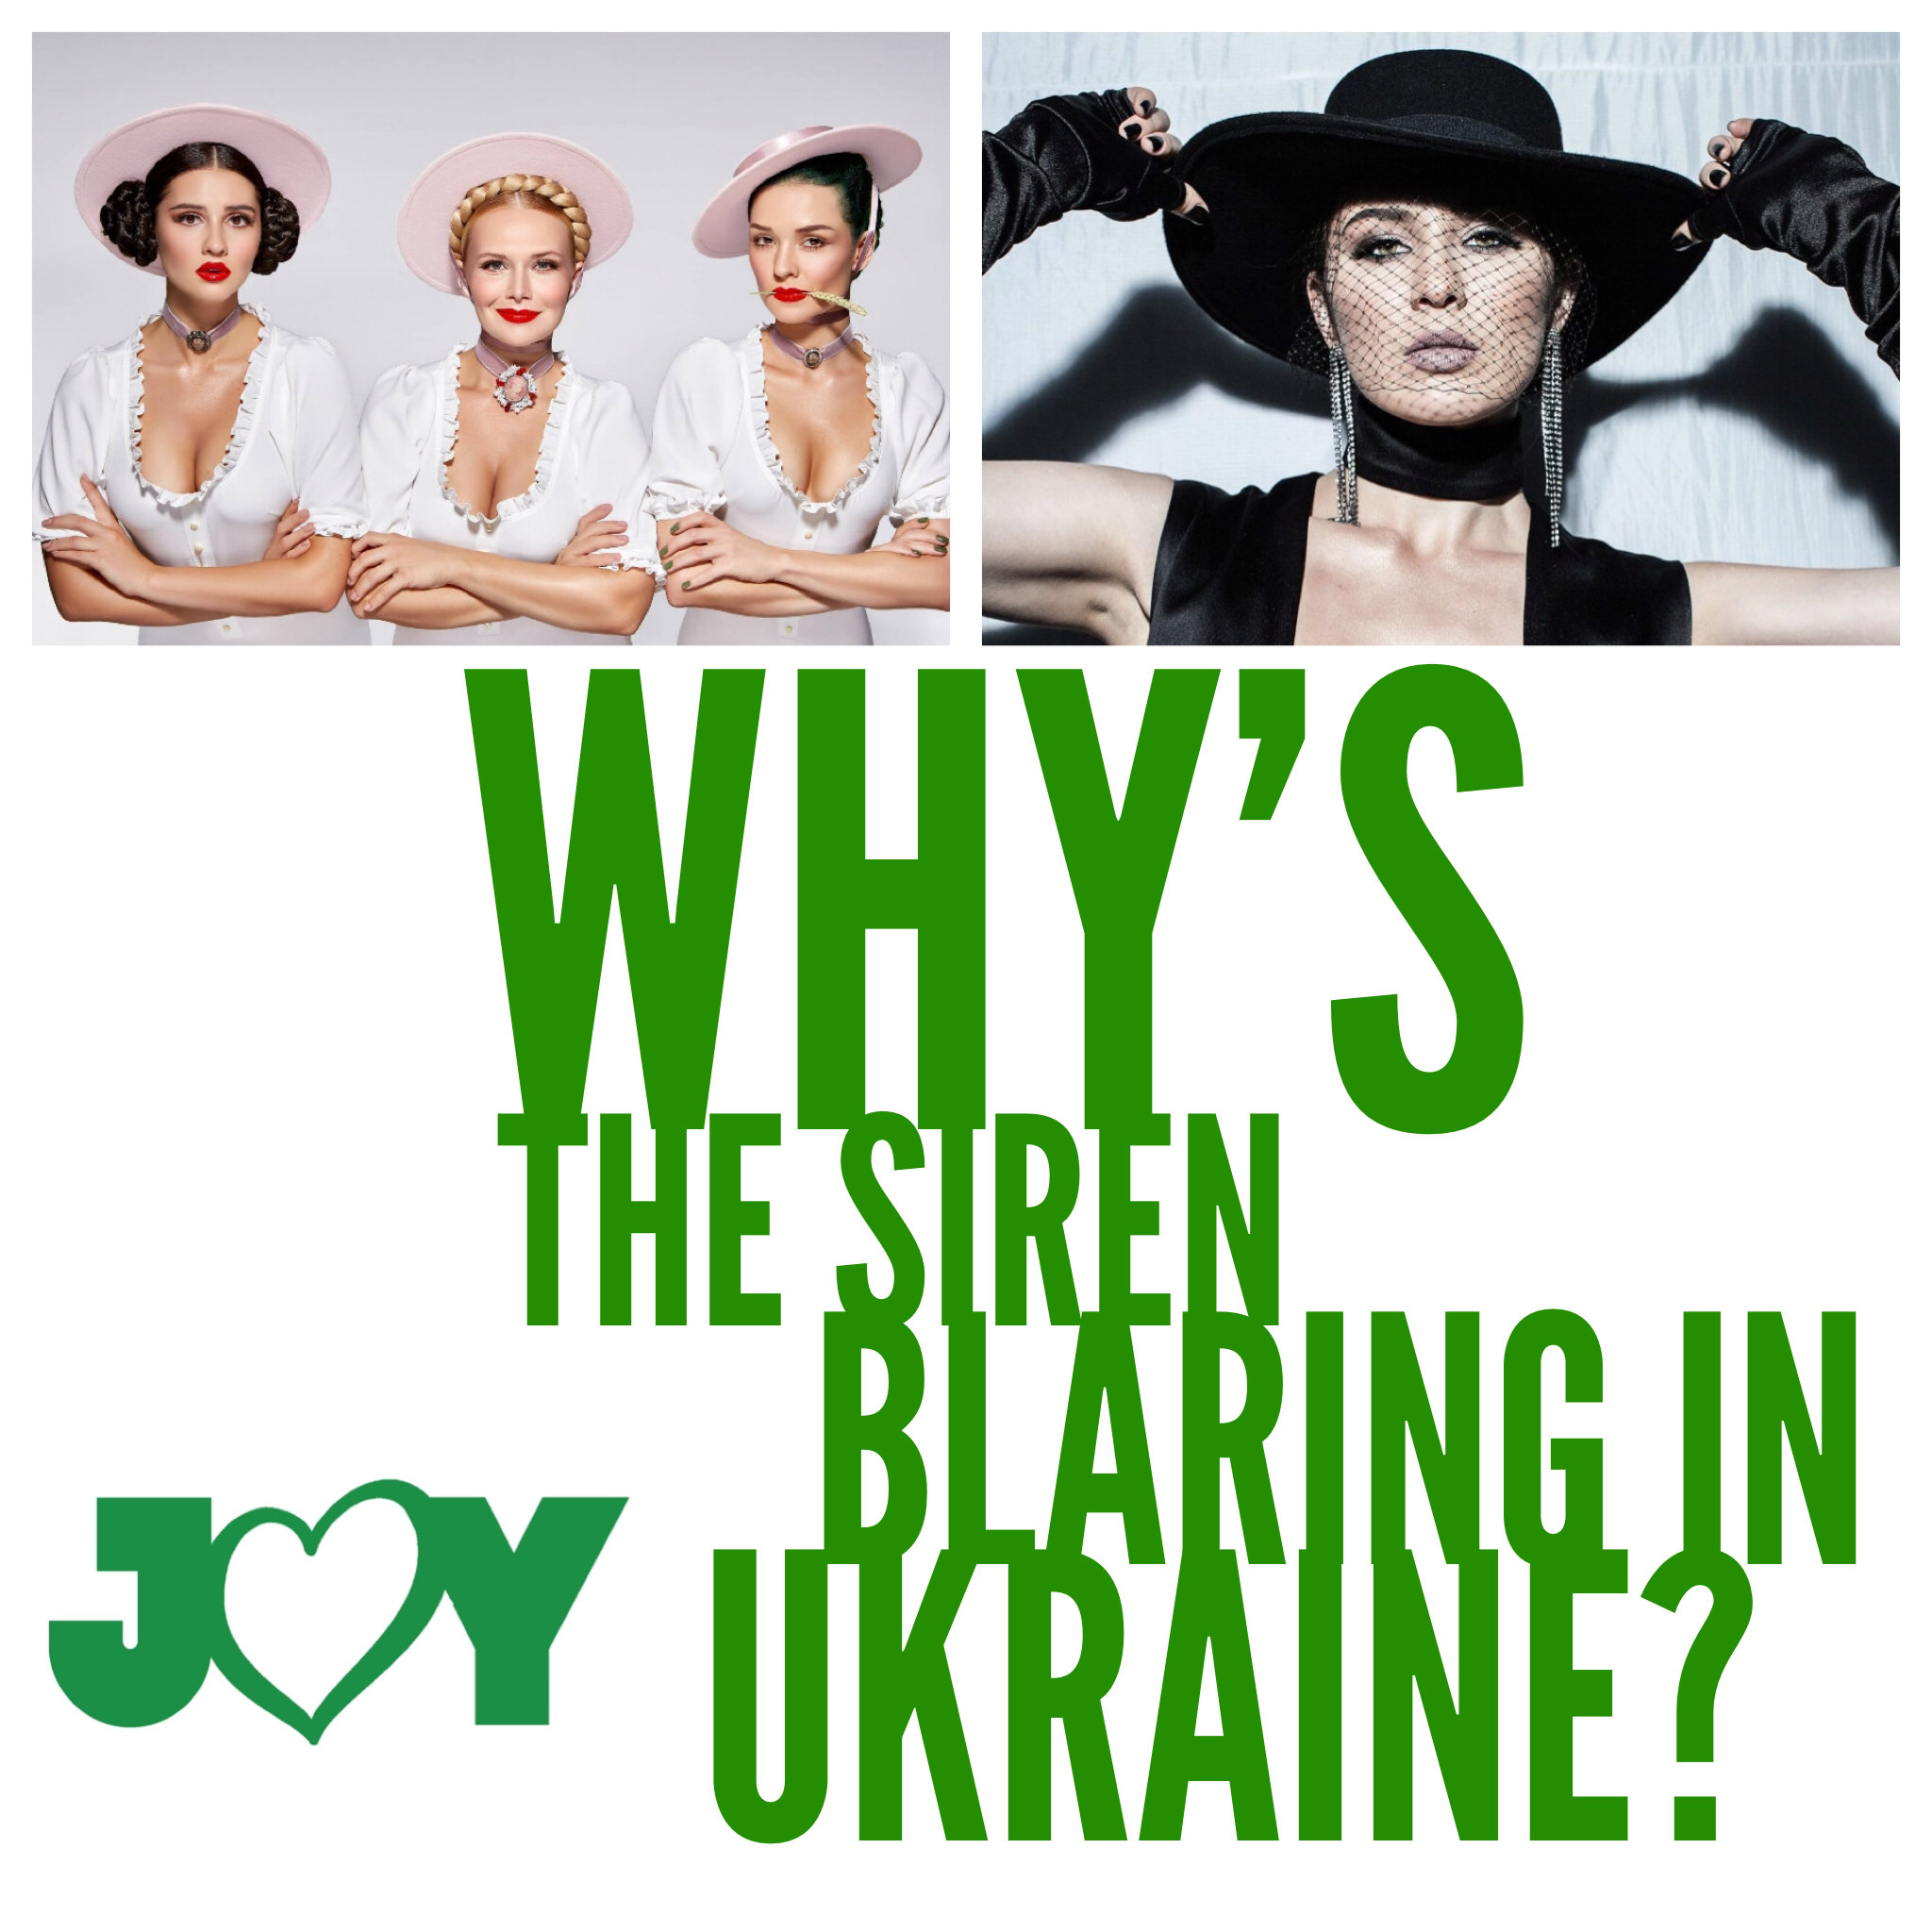 Why’s the siren blaring in Ukraine?